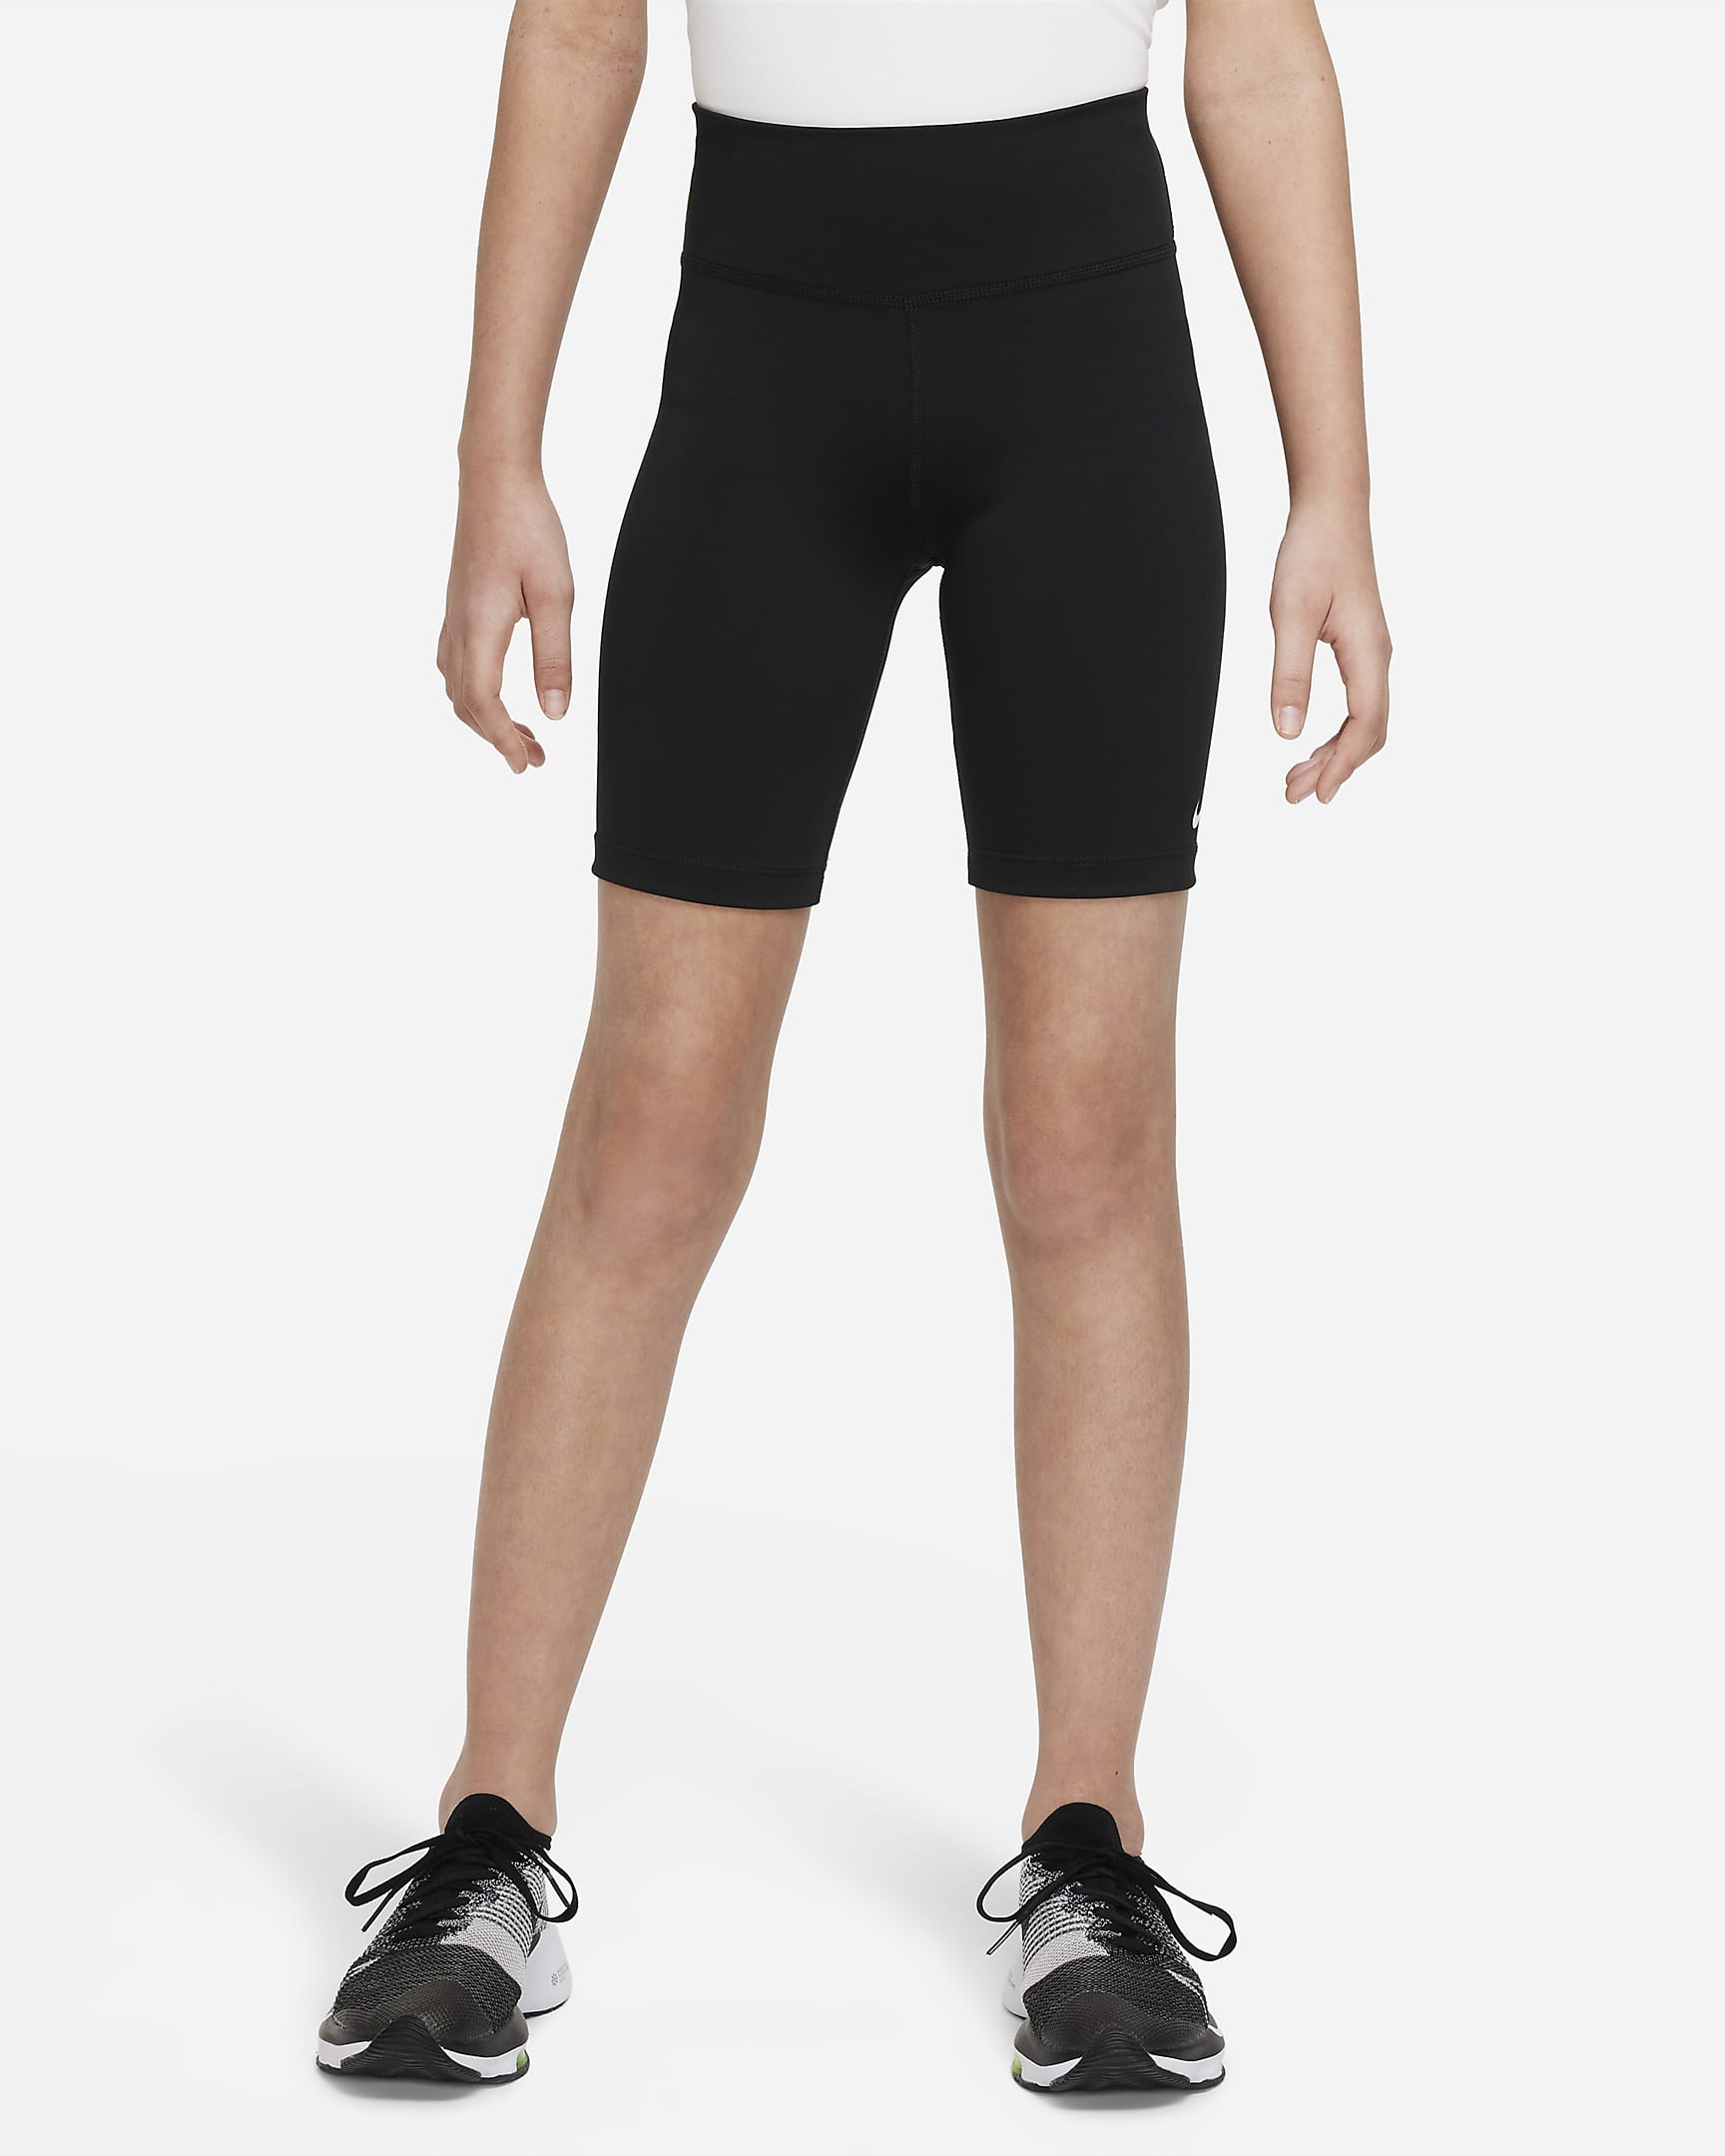 Nike One Older Kids' (Girls') Biker Shorts - Black/White